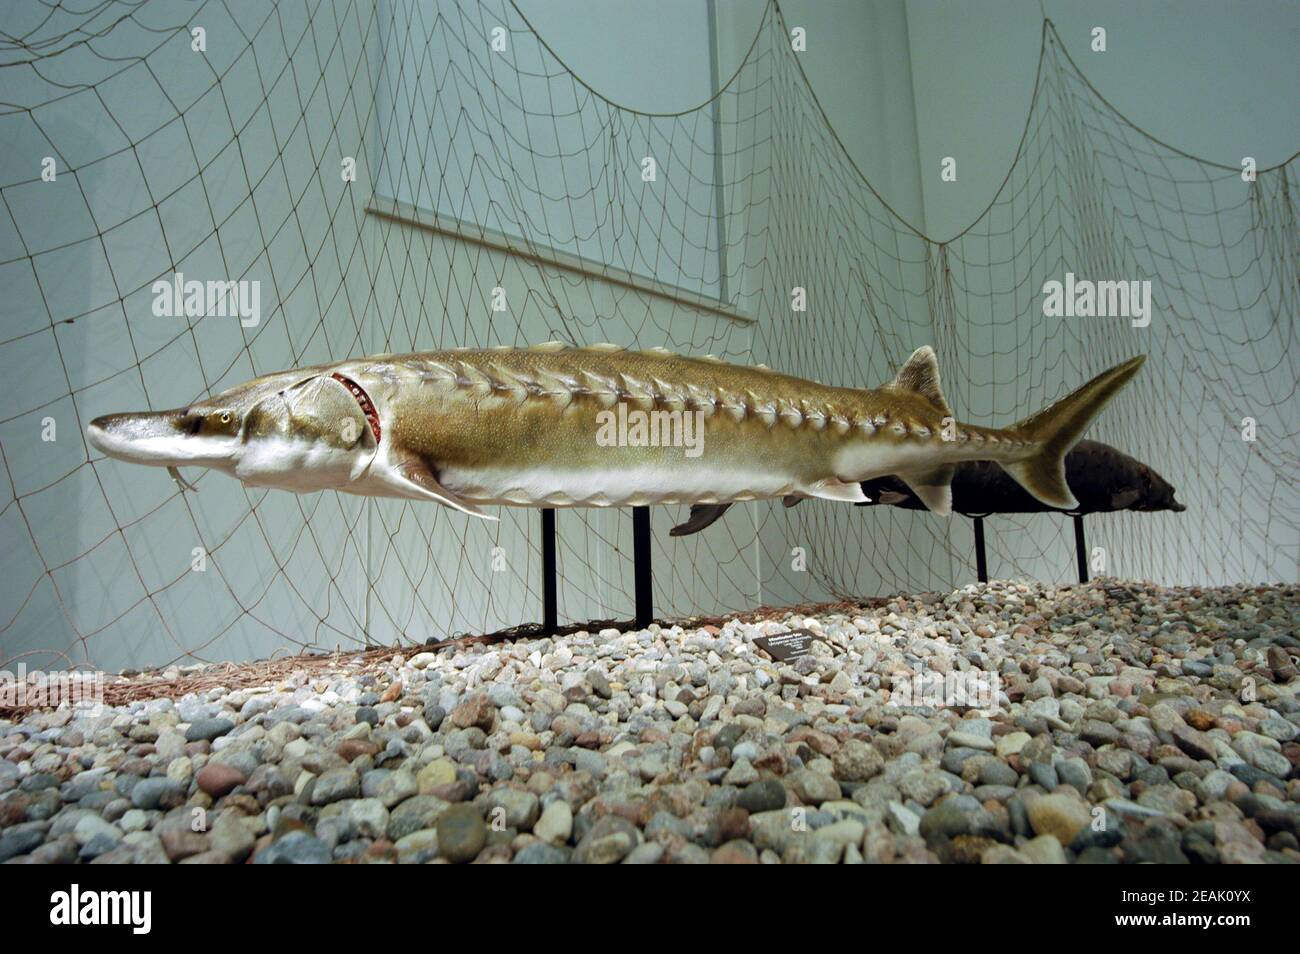 a salmon, an aquatic animal Stock Photo